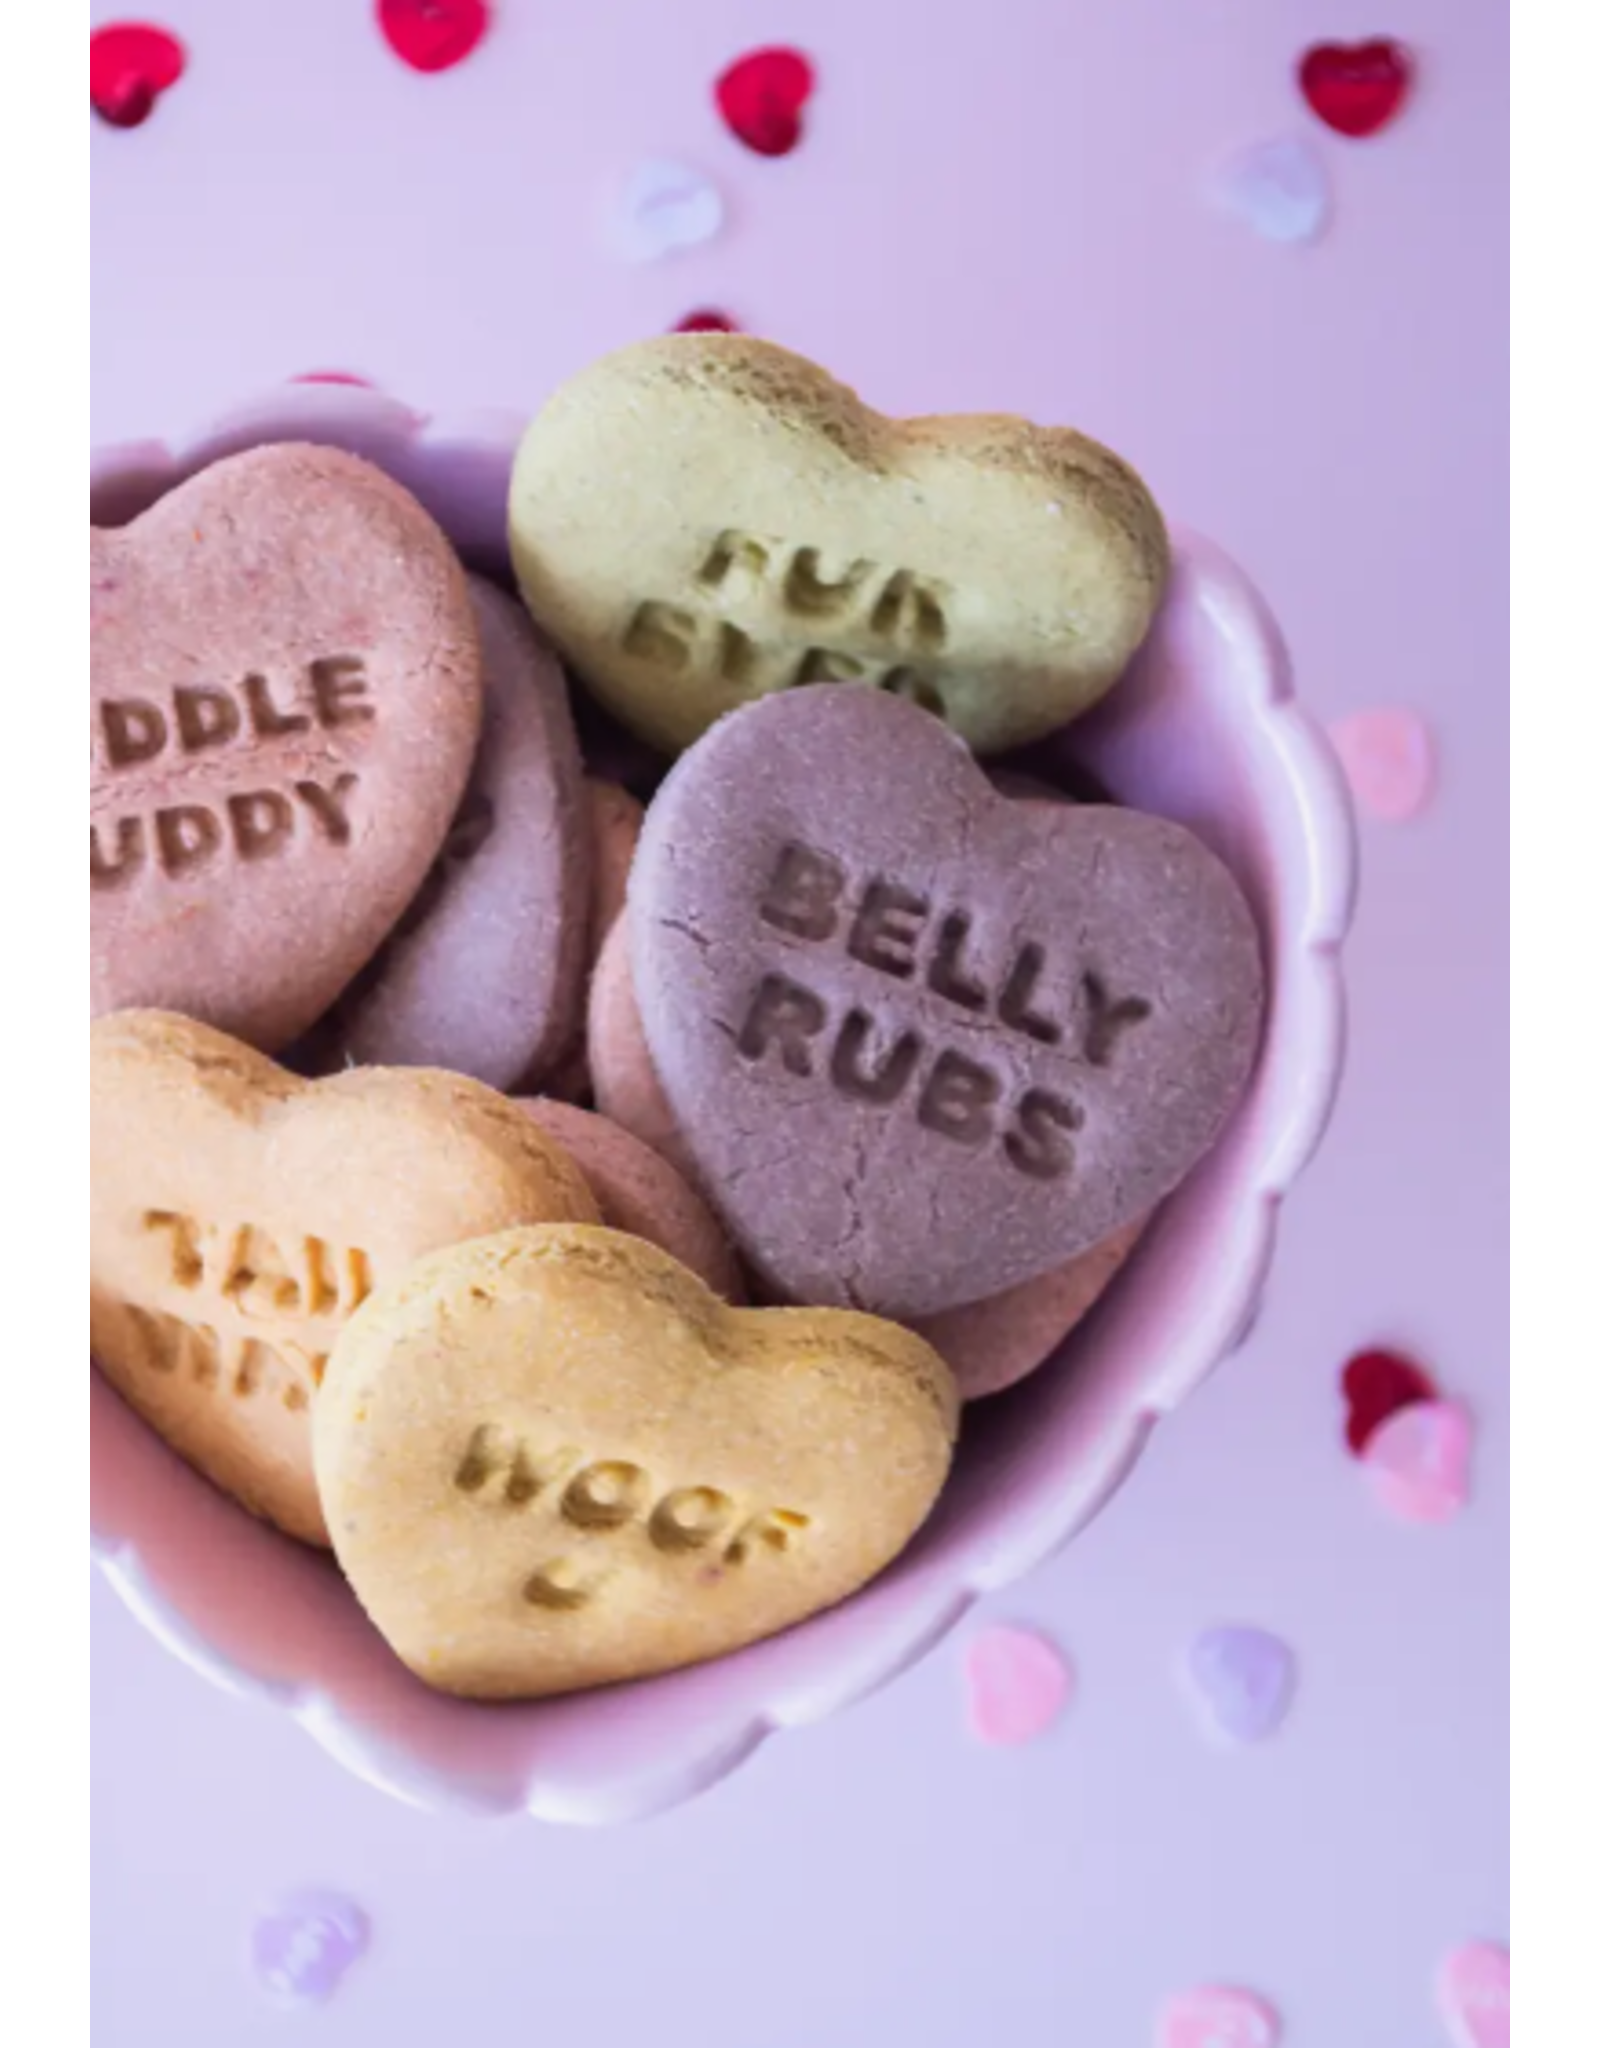 Clover Dog Co Pawlentine's Conversation Hearts - Valentine's Dog Treats